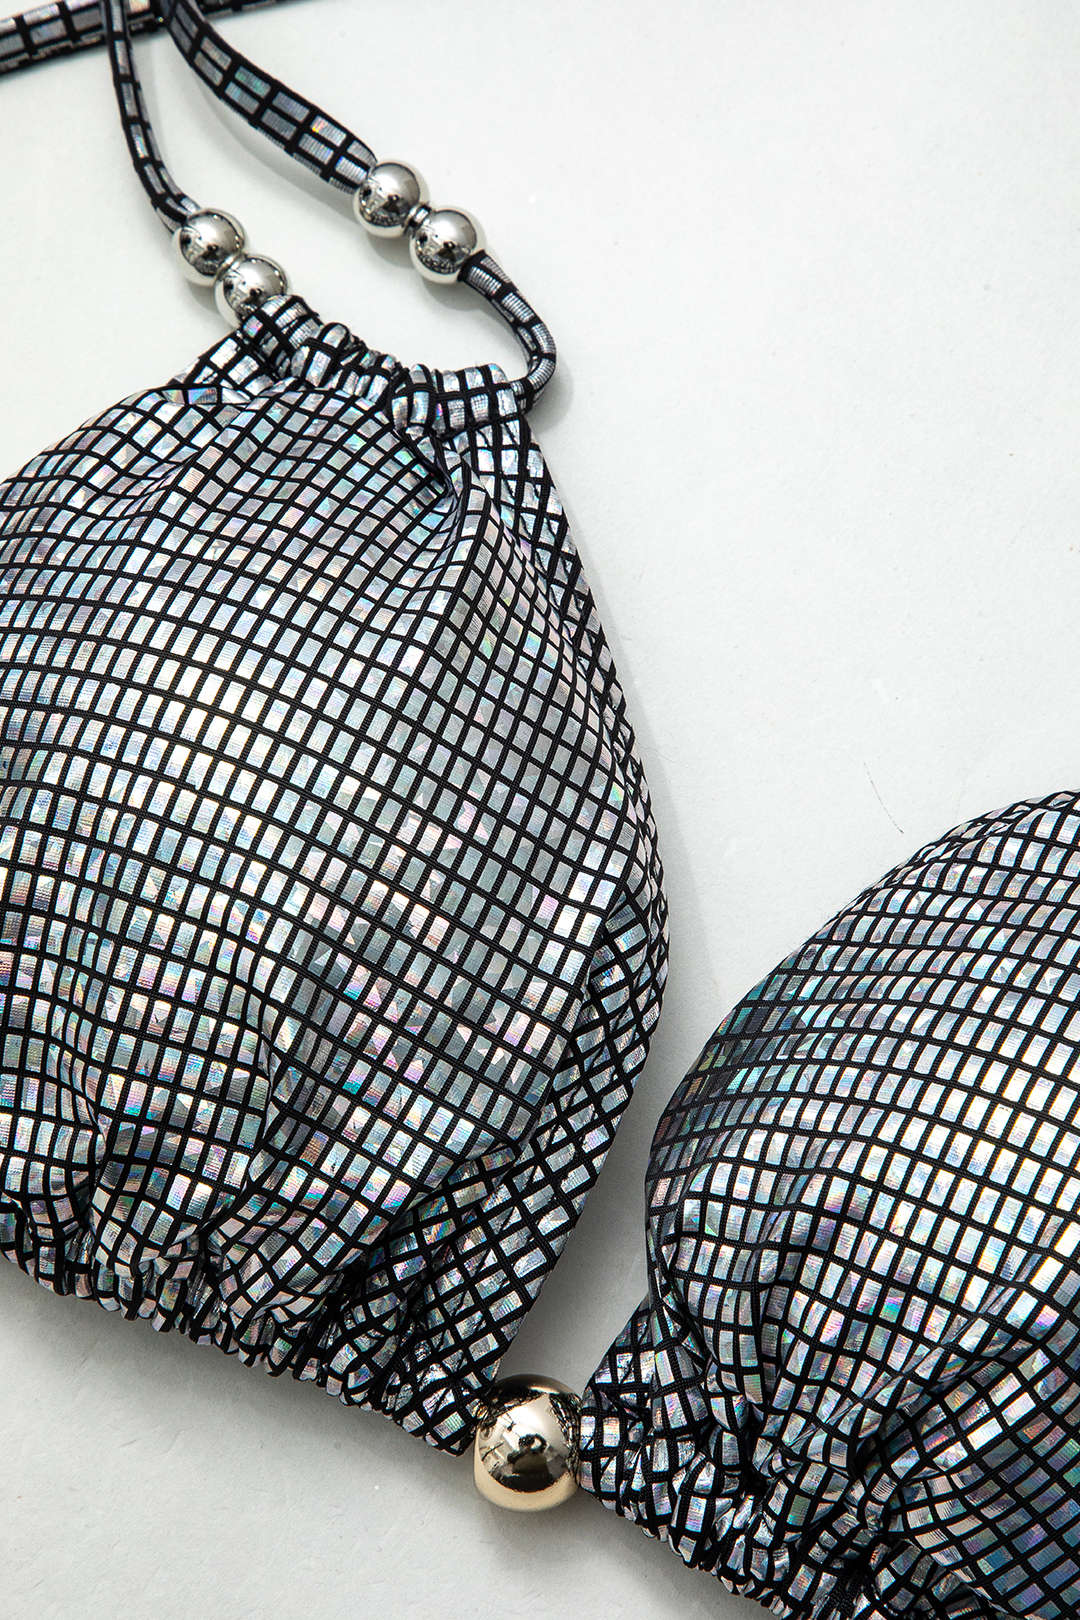 Metallic Grid Back Tie Halter Bikini Set